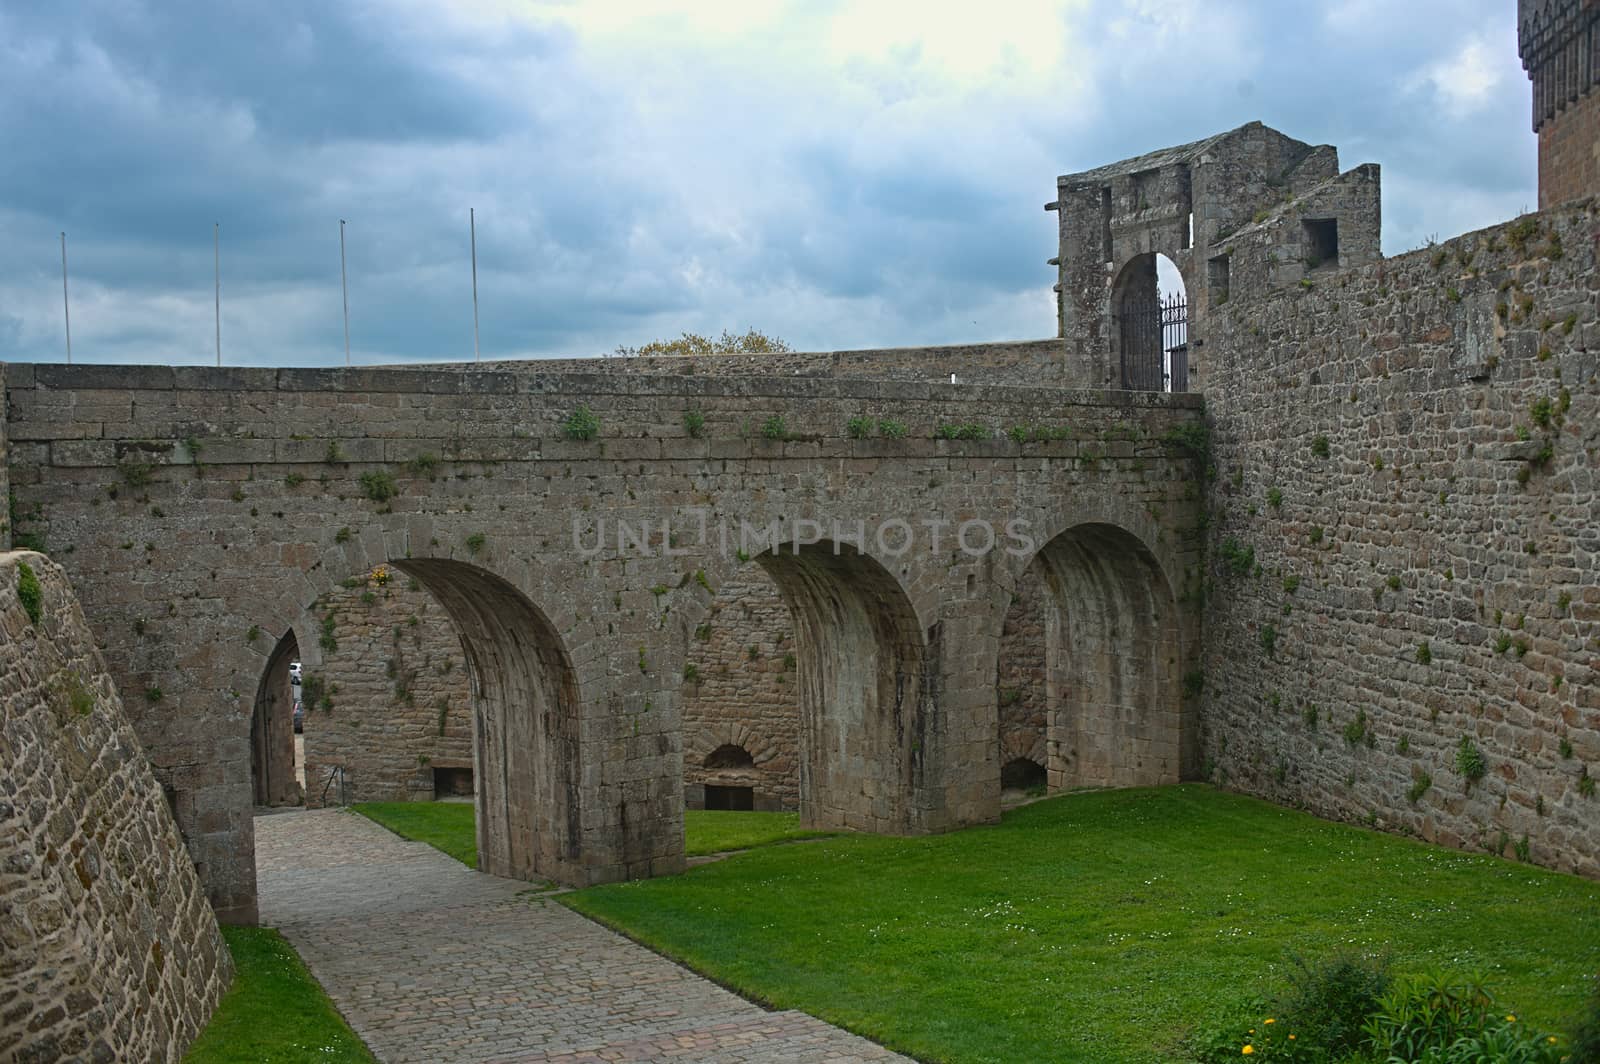 Big stone walls, gate and bridge at Dinan fortress, France by sheriffkule